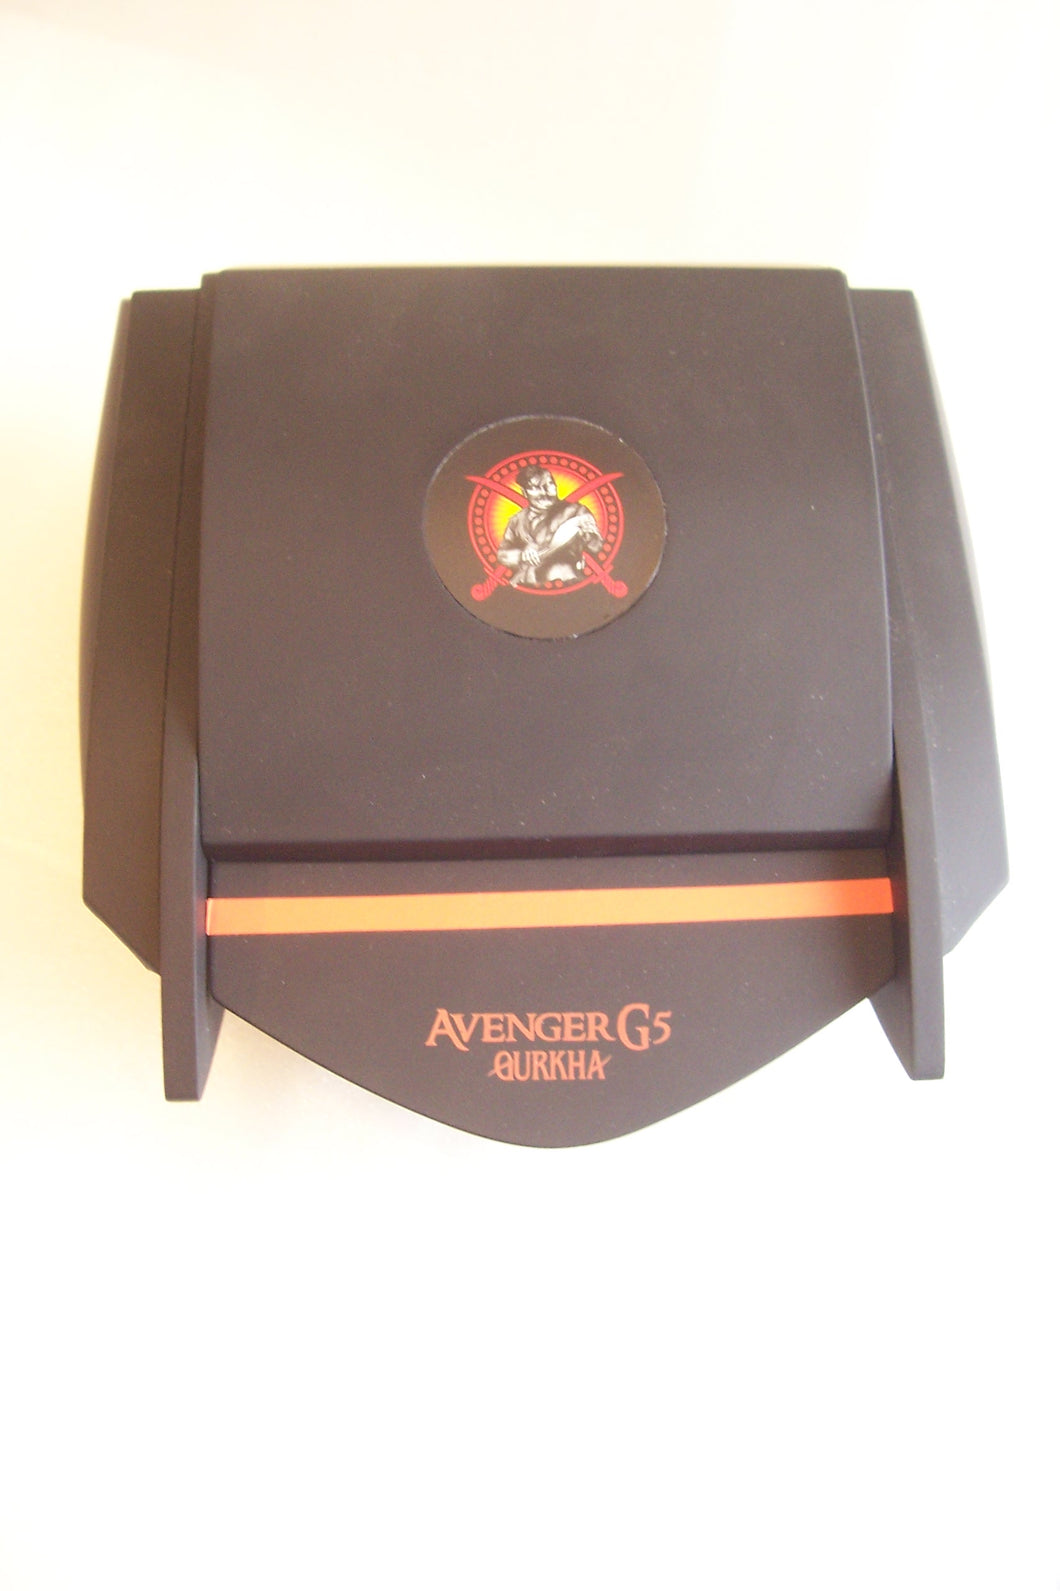 Gurkha Avenger G5 Empty Cigar Box